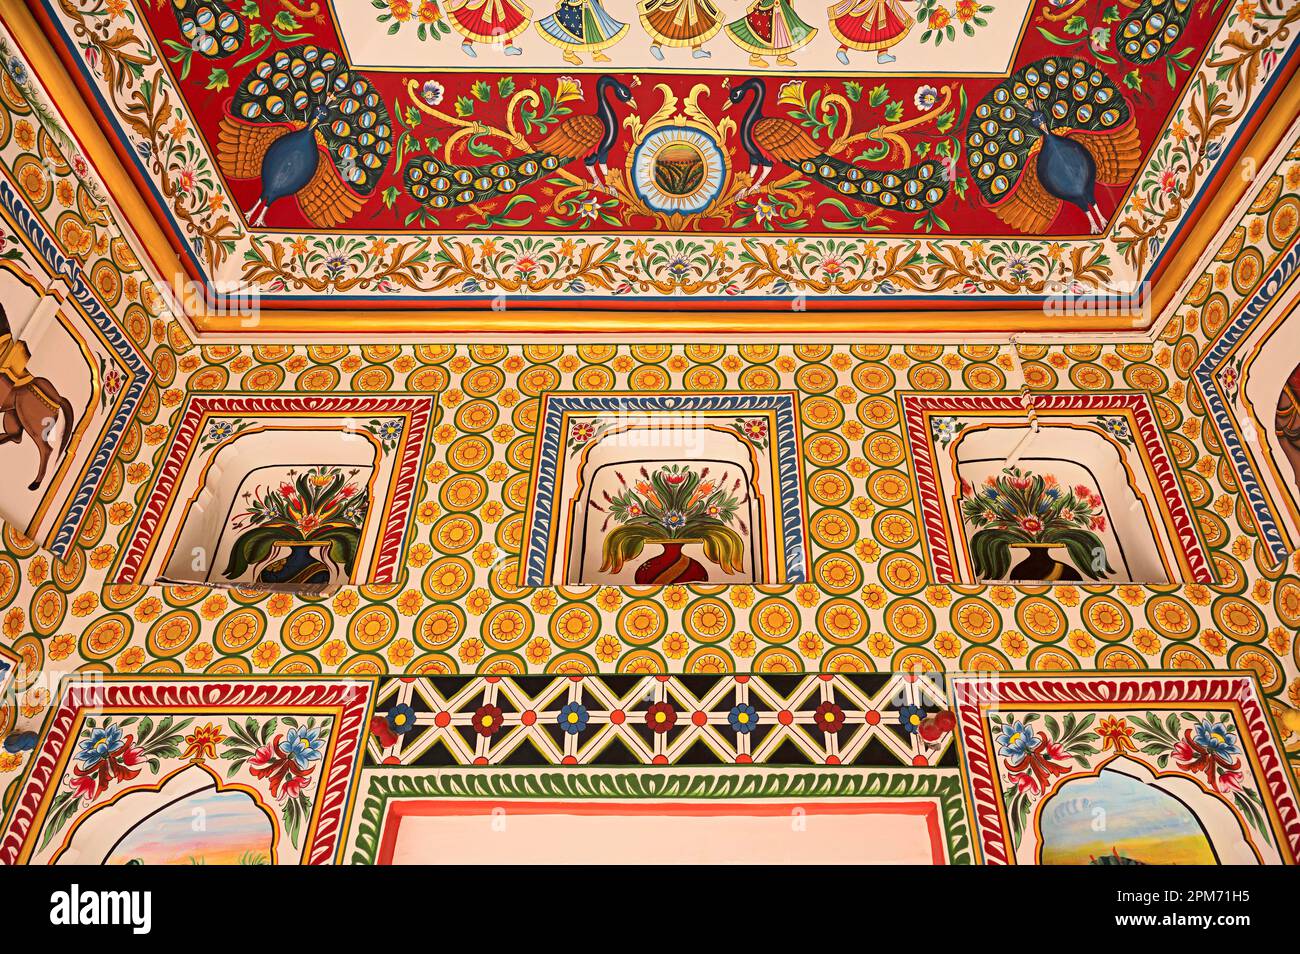 Dipinti colorati sul soffitto di un cancello d'ingresso di Raghu Nath Ji Mandir, dedicato a Lord Rama e Sita, situato a Mandawa, Shekhawati, Rajas Foto Stock